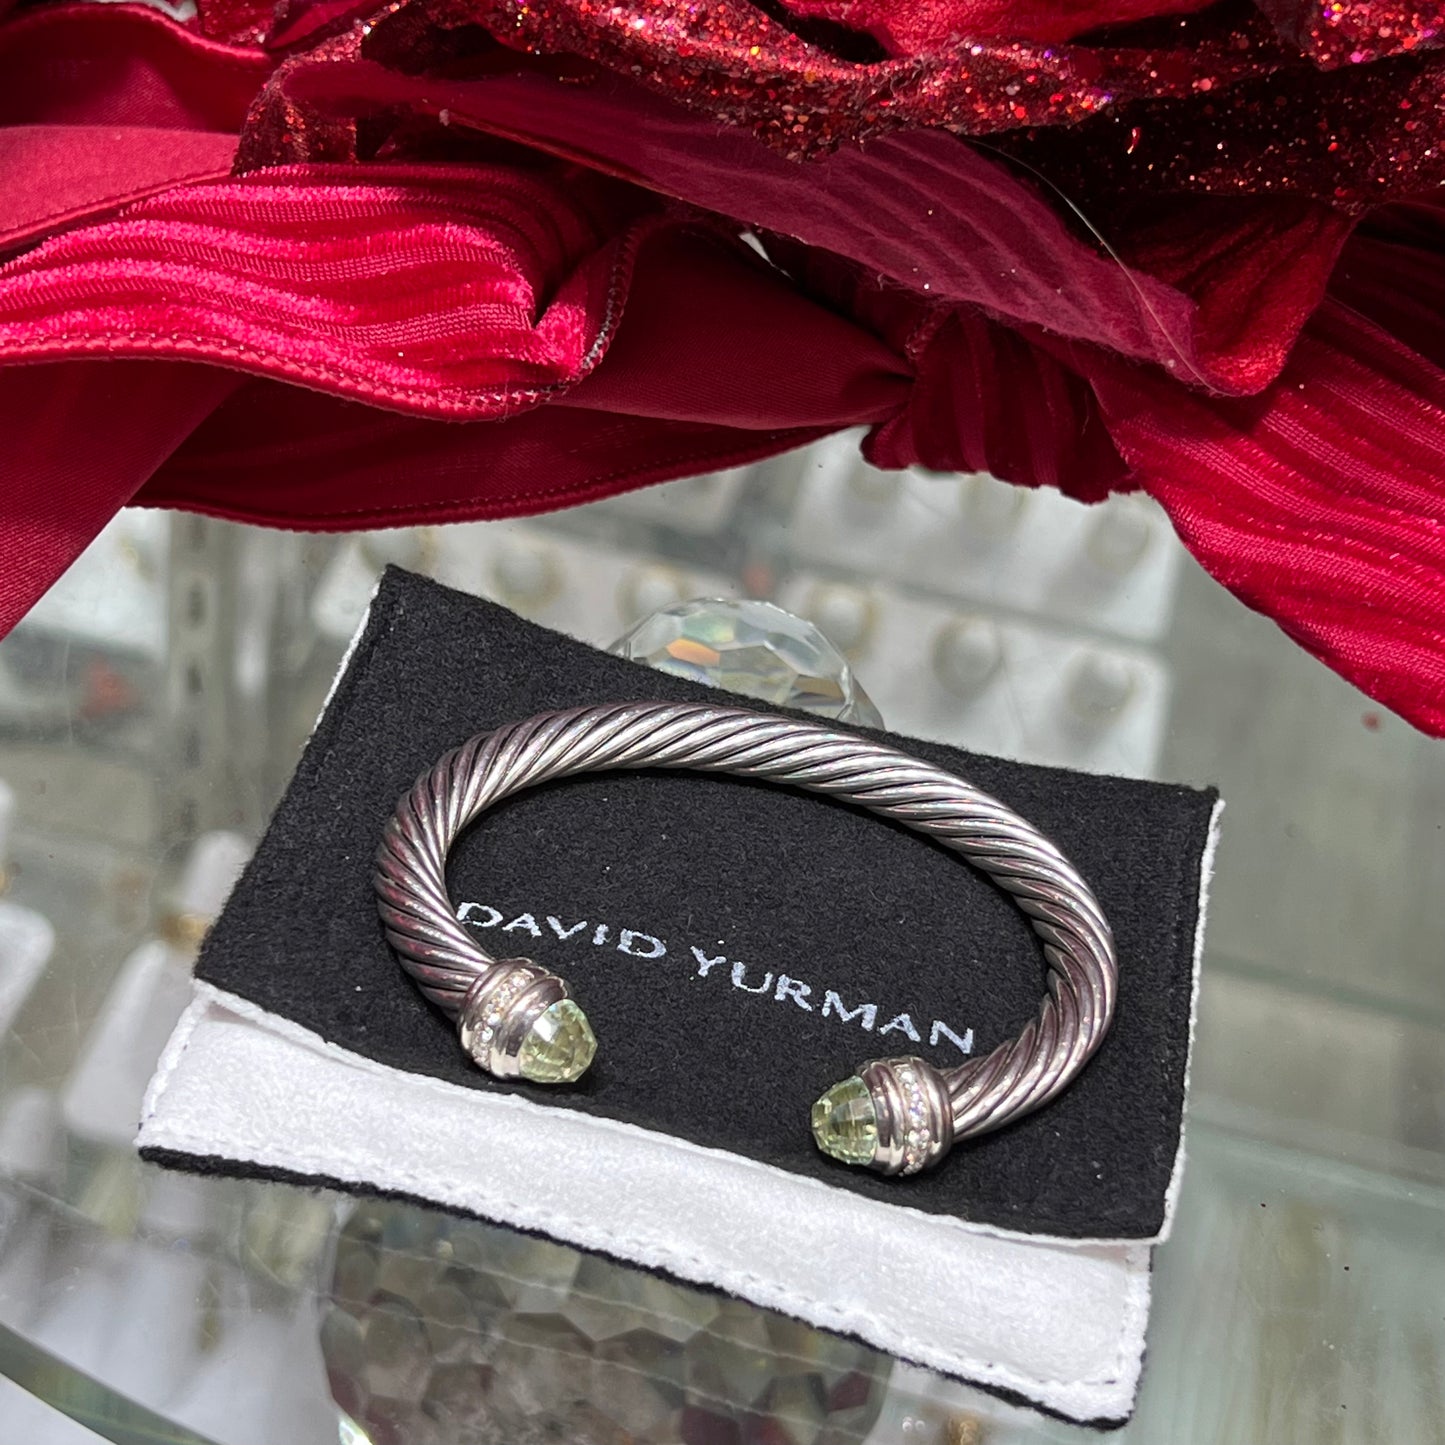 David Yurman Cable Bracelet, Prasiolite with Diamonds